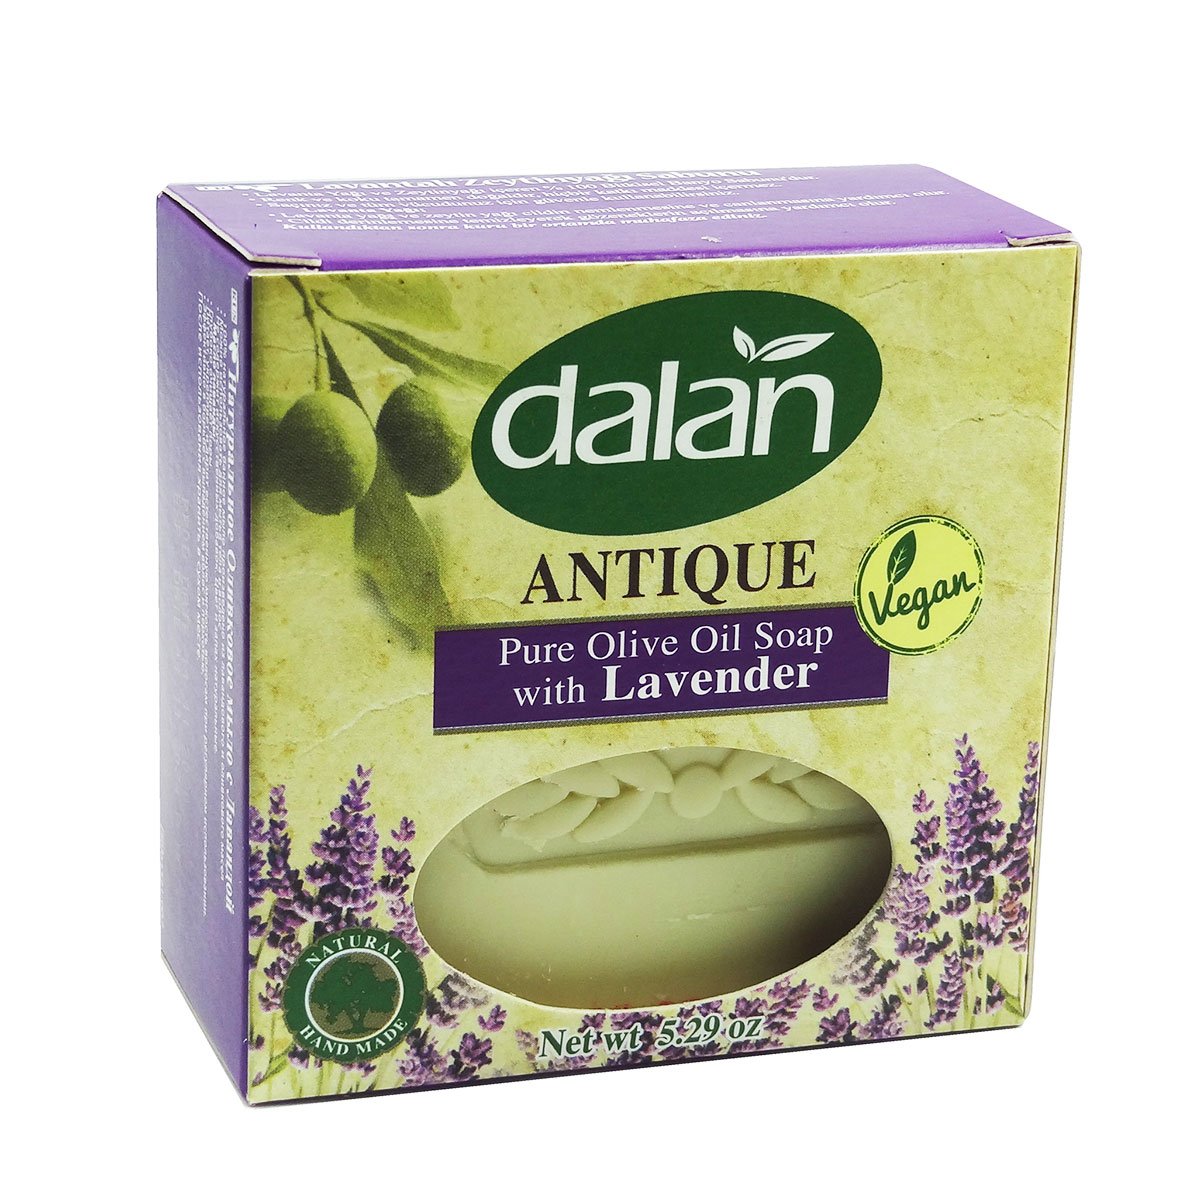 Dalan Antique Lavender Soap with Olive Oil 150g